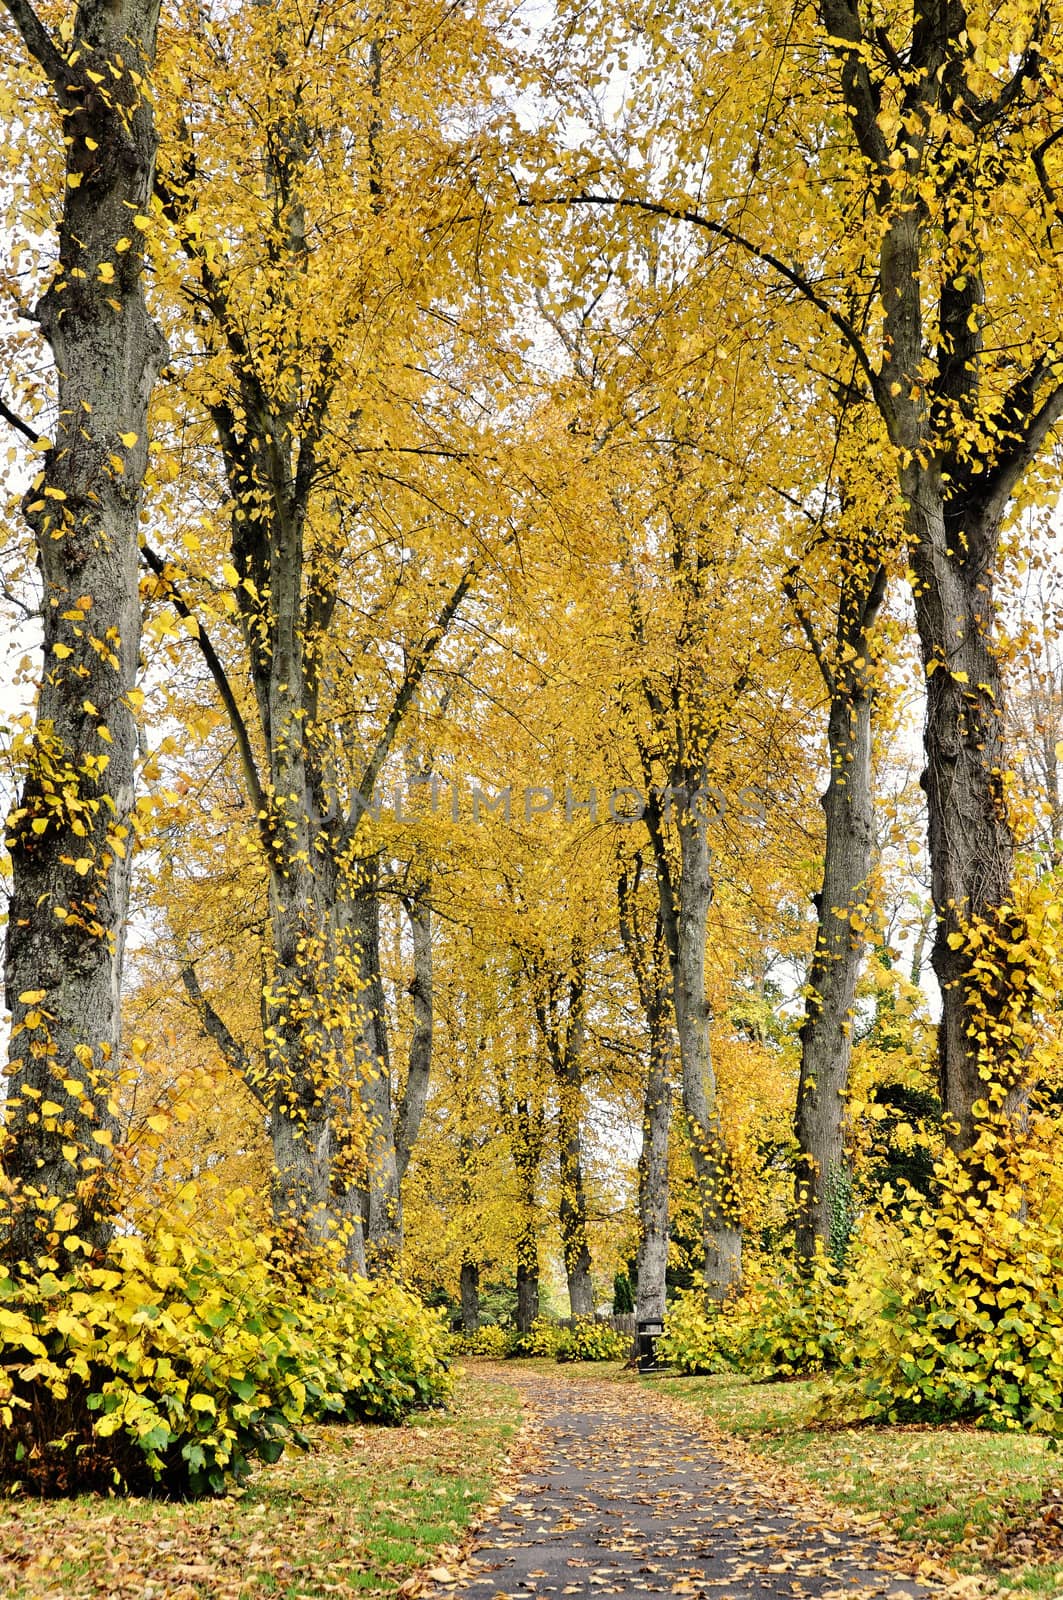 Pathway in a park, autumn season, vertical shot